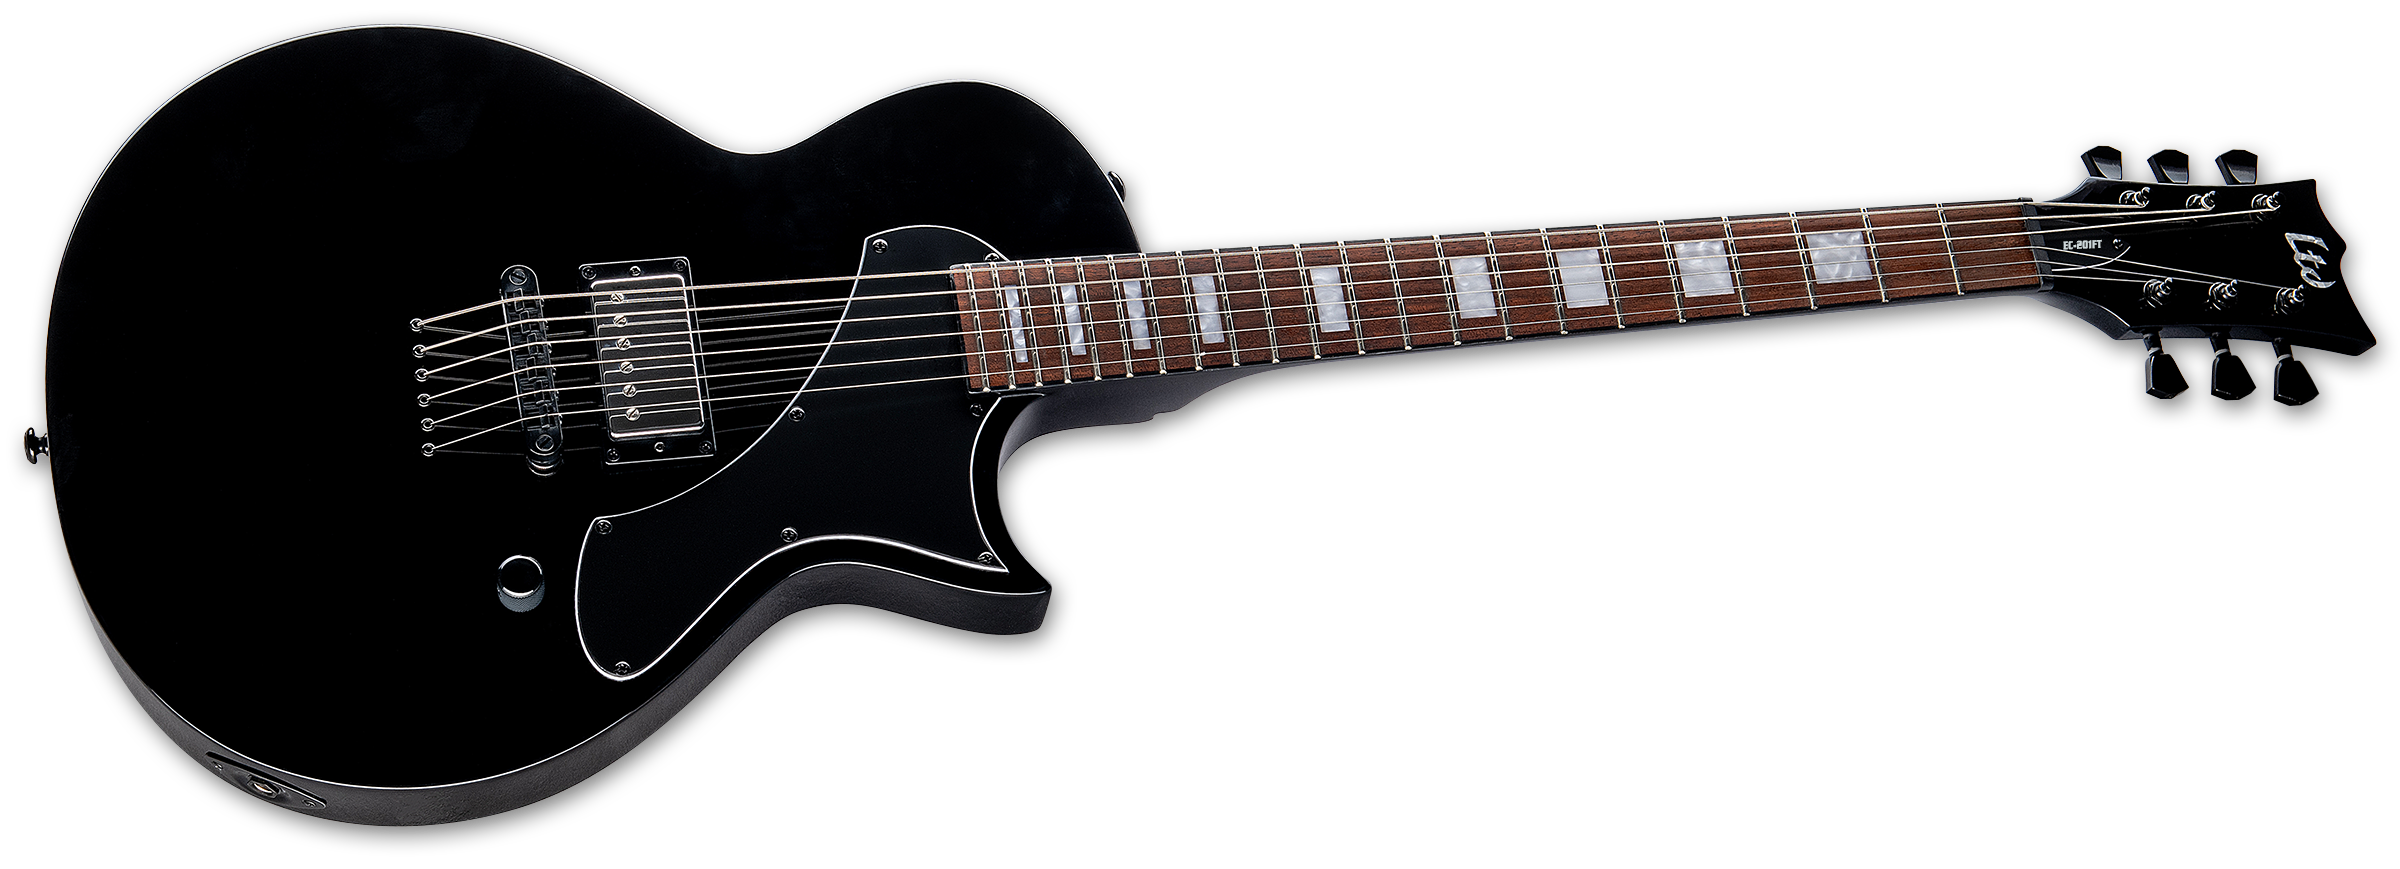 Ltd Ec-201 1h Ht Jat - Black - E-Gitarre aus Metall - Variation 2